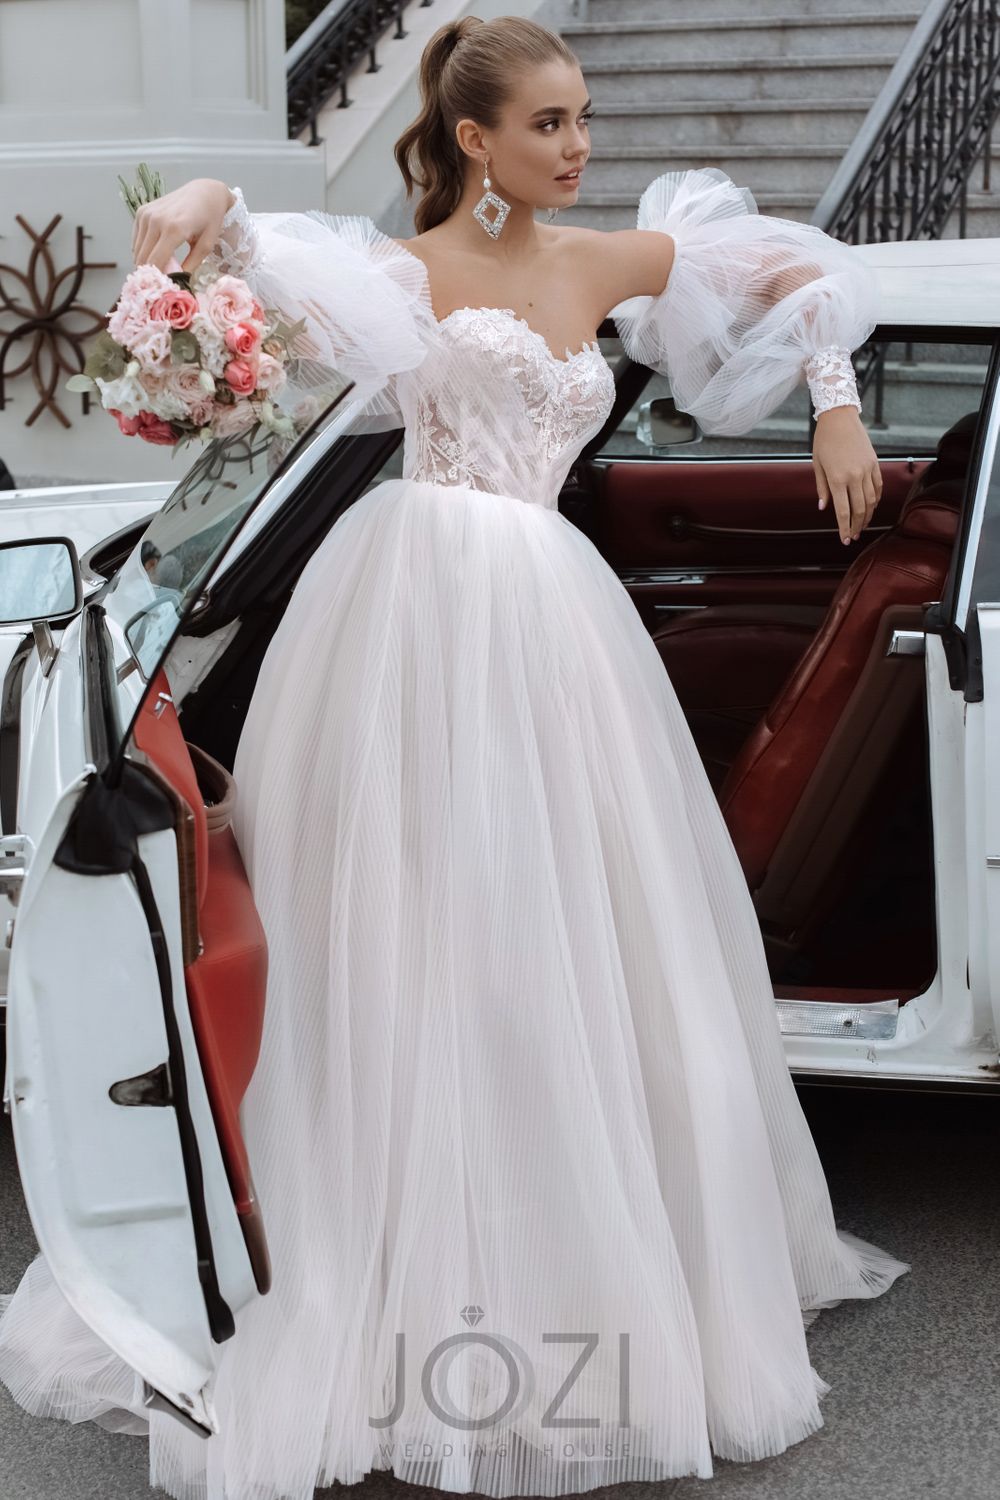 Свадебное платье от бренда Jozi 'Аурелия' в стиле - С рукавами